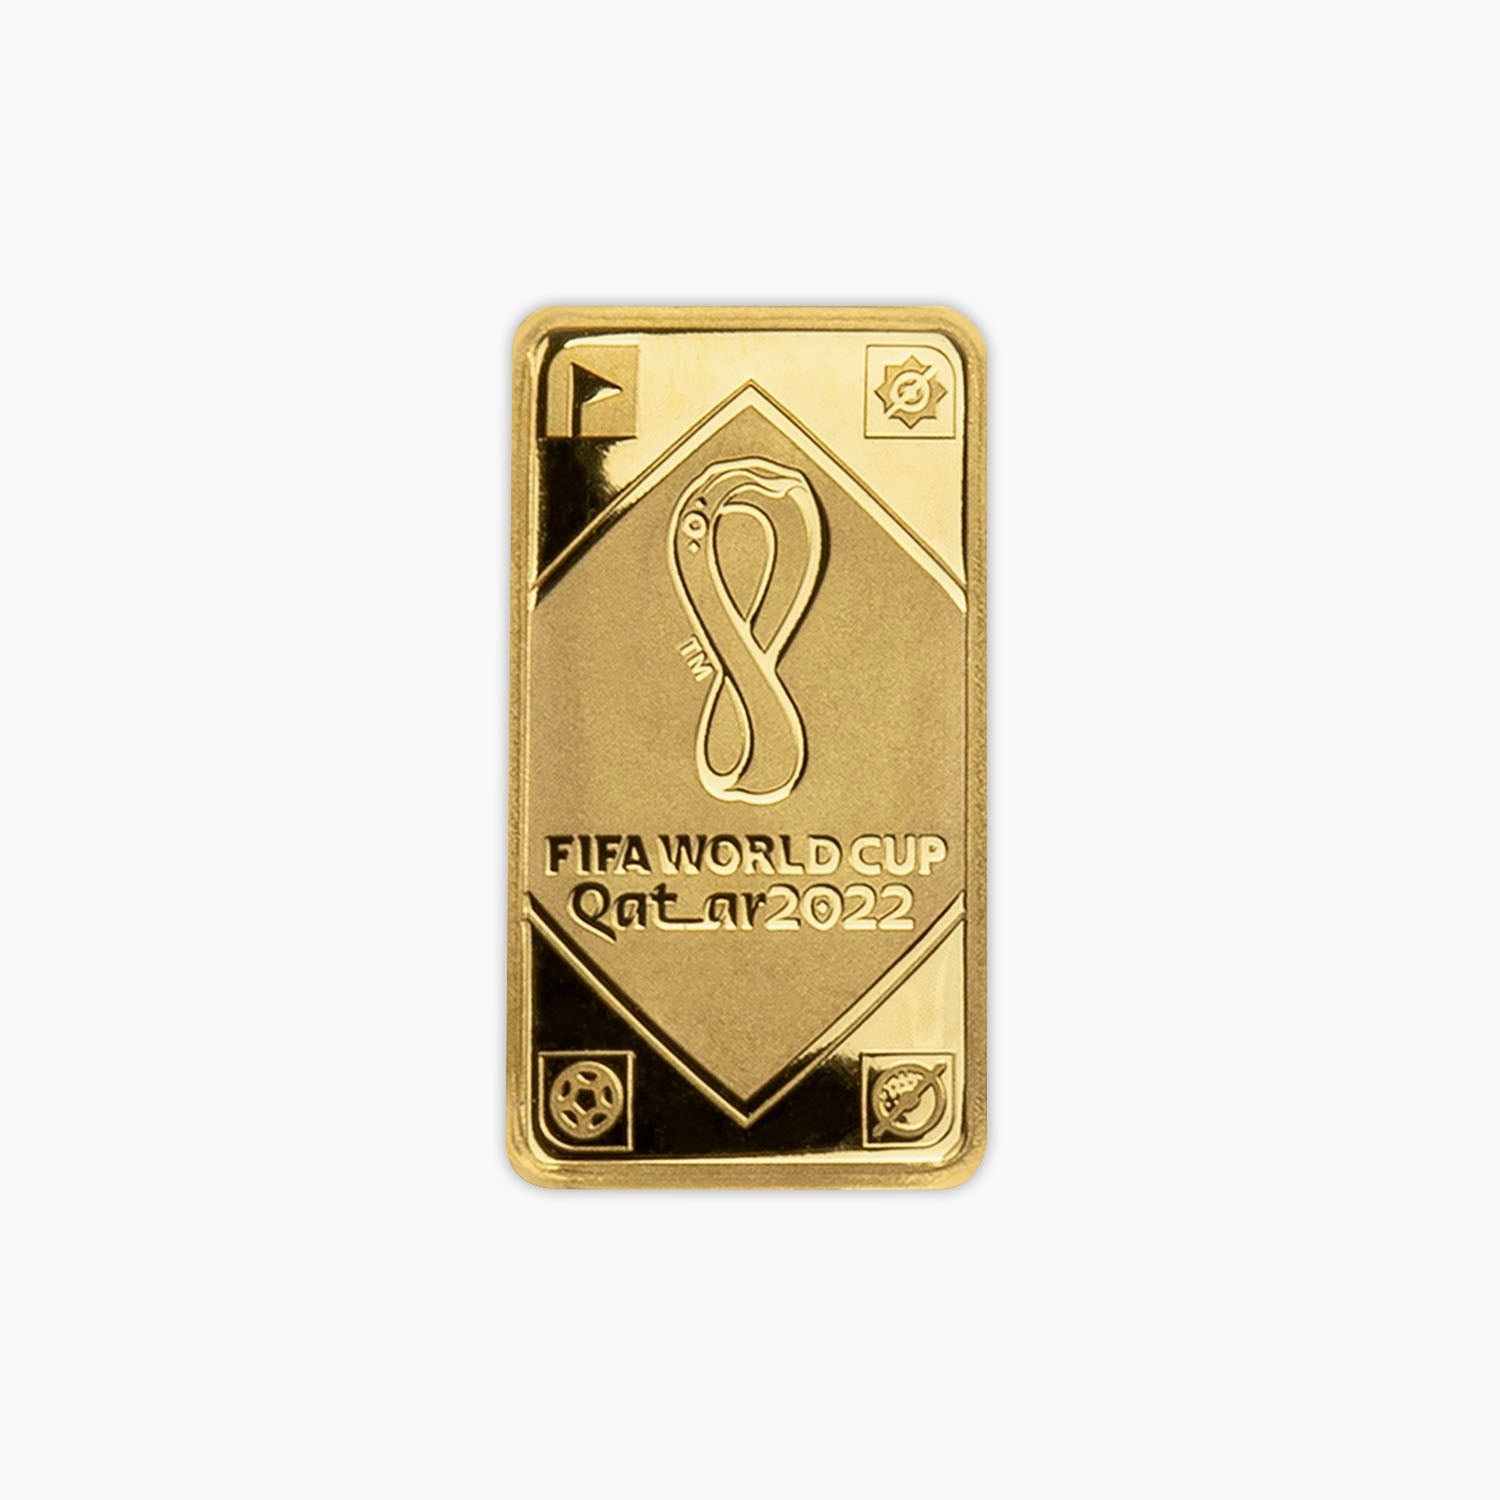 FIFA World Cup 2022 Qatar 0.31g Gold Bar Emblem